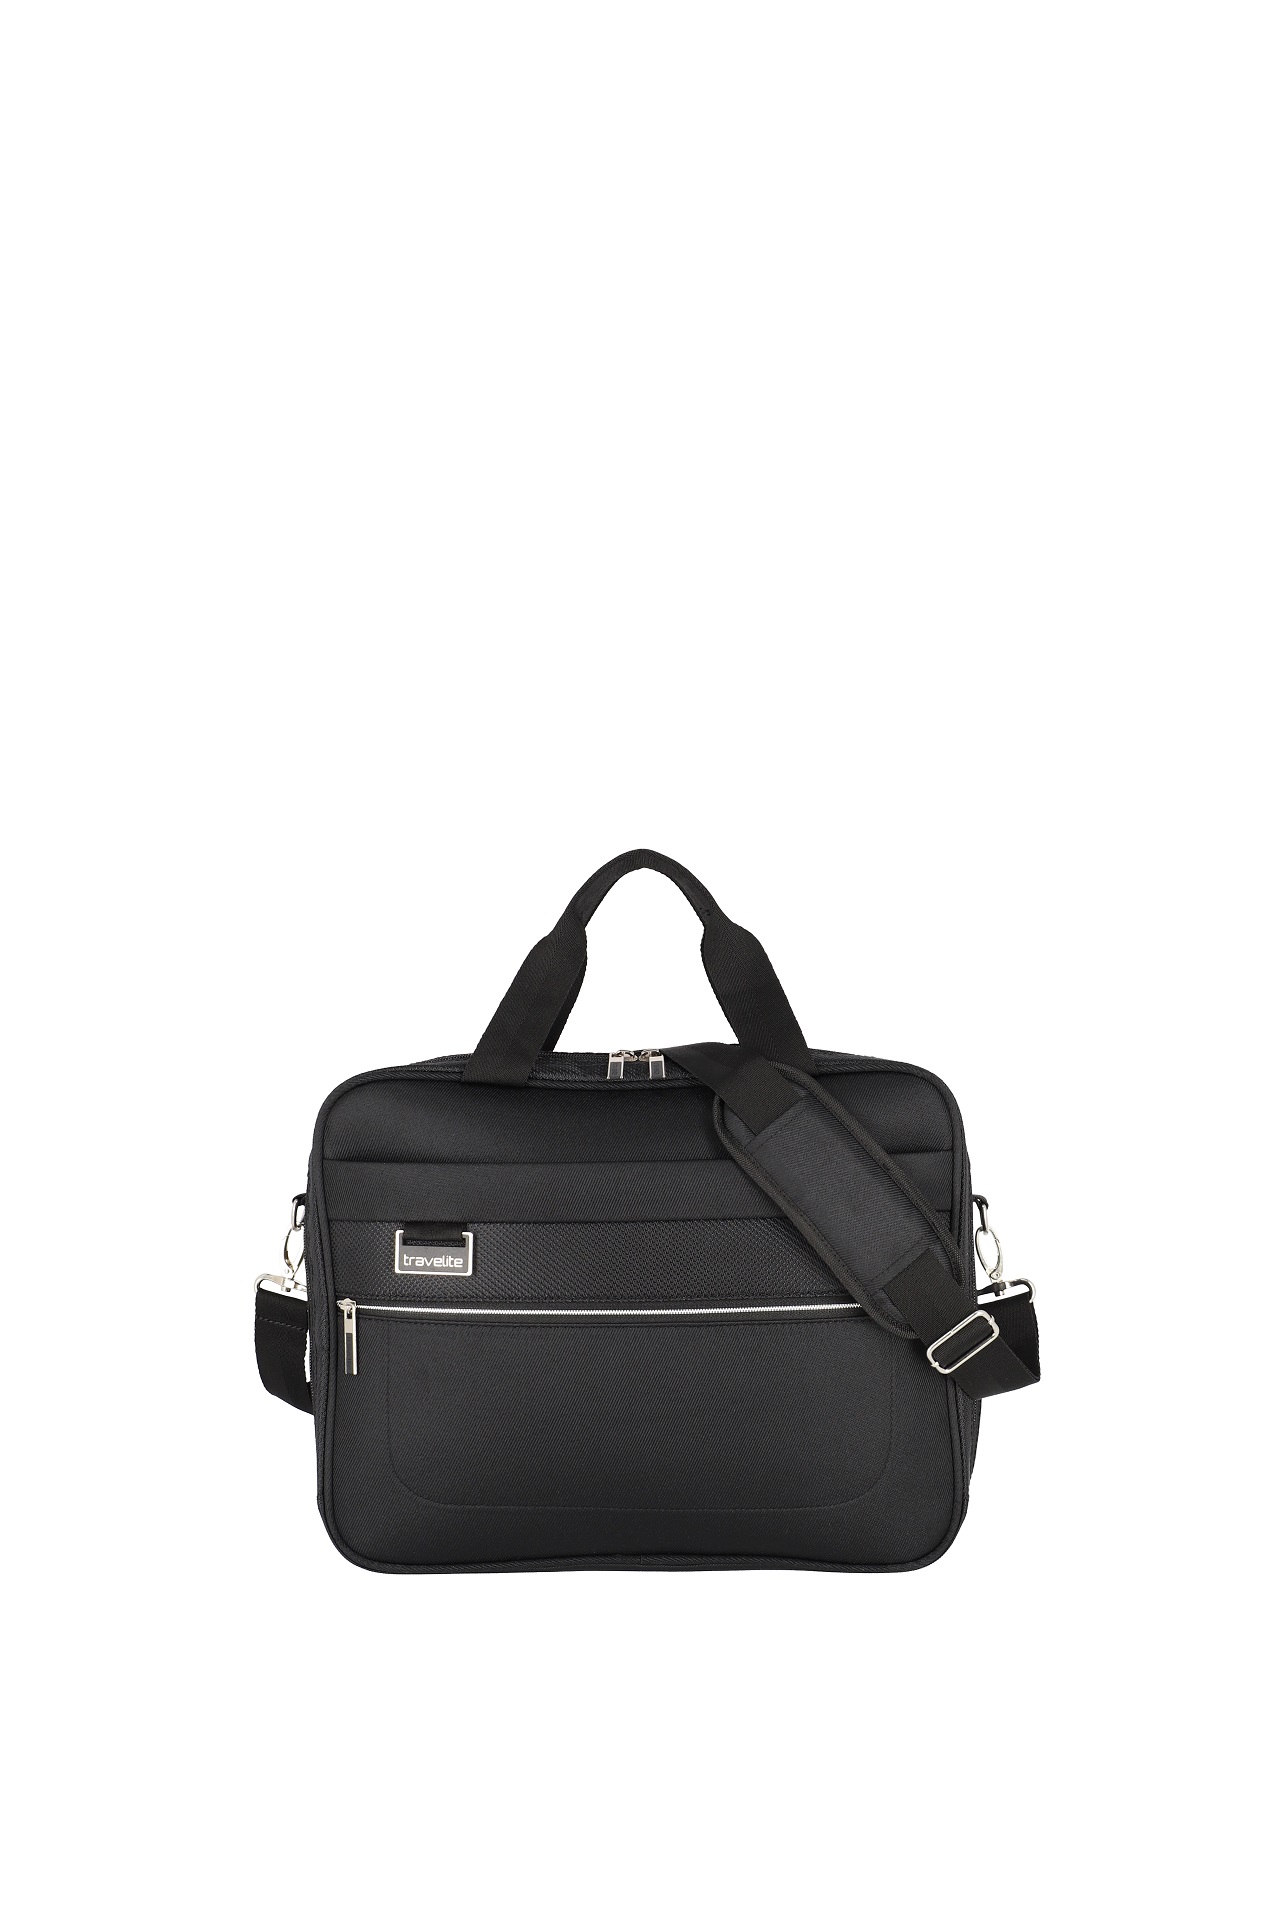 E-shop Travelite Miigo Board bag Black